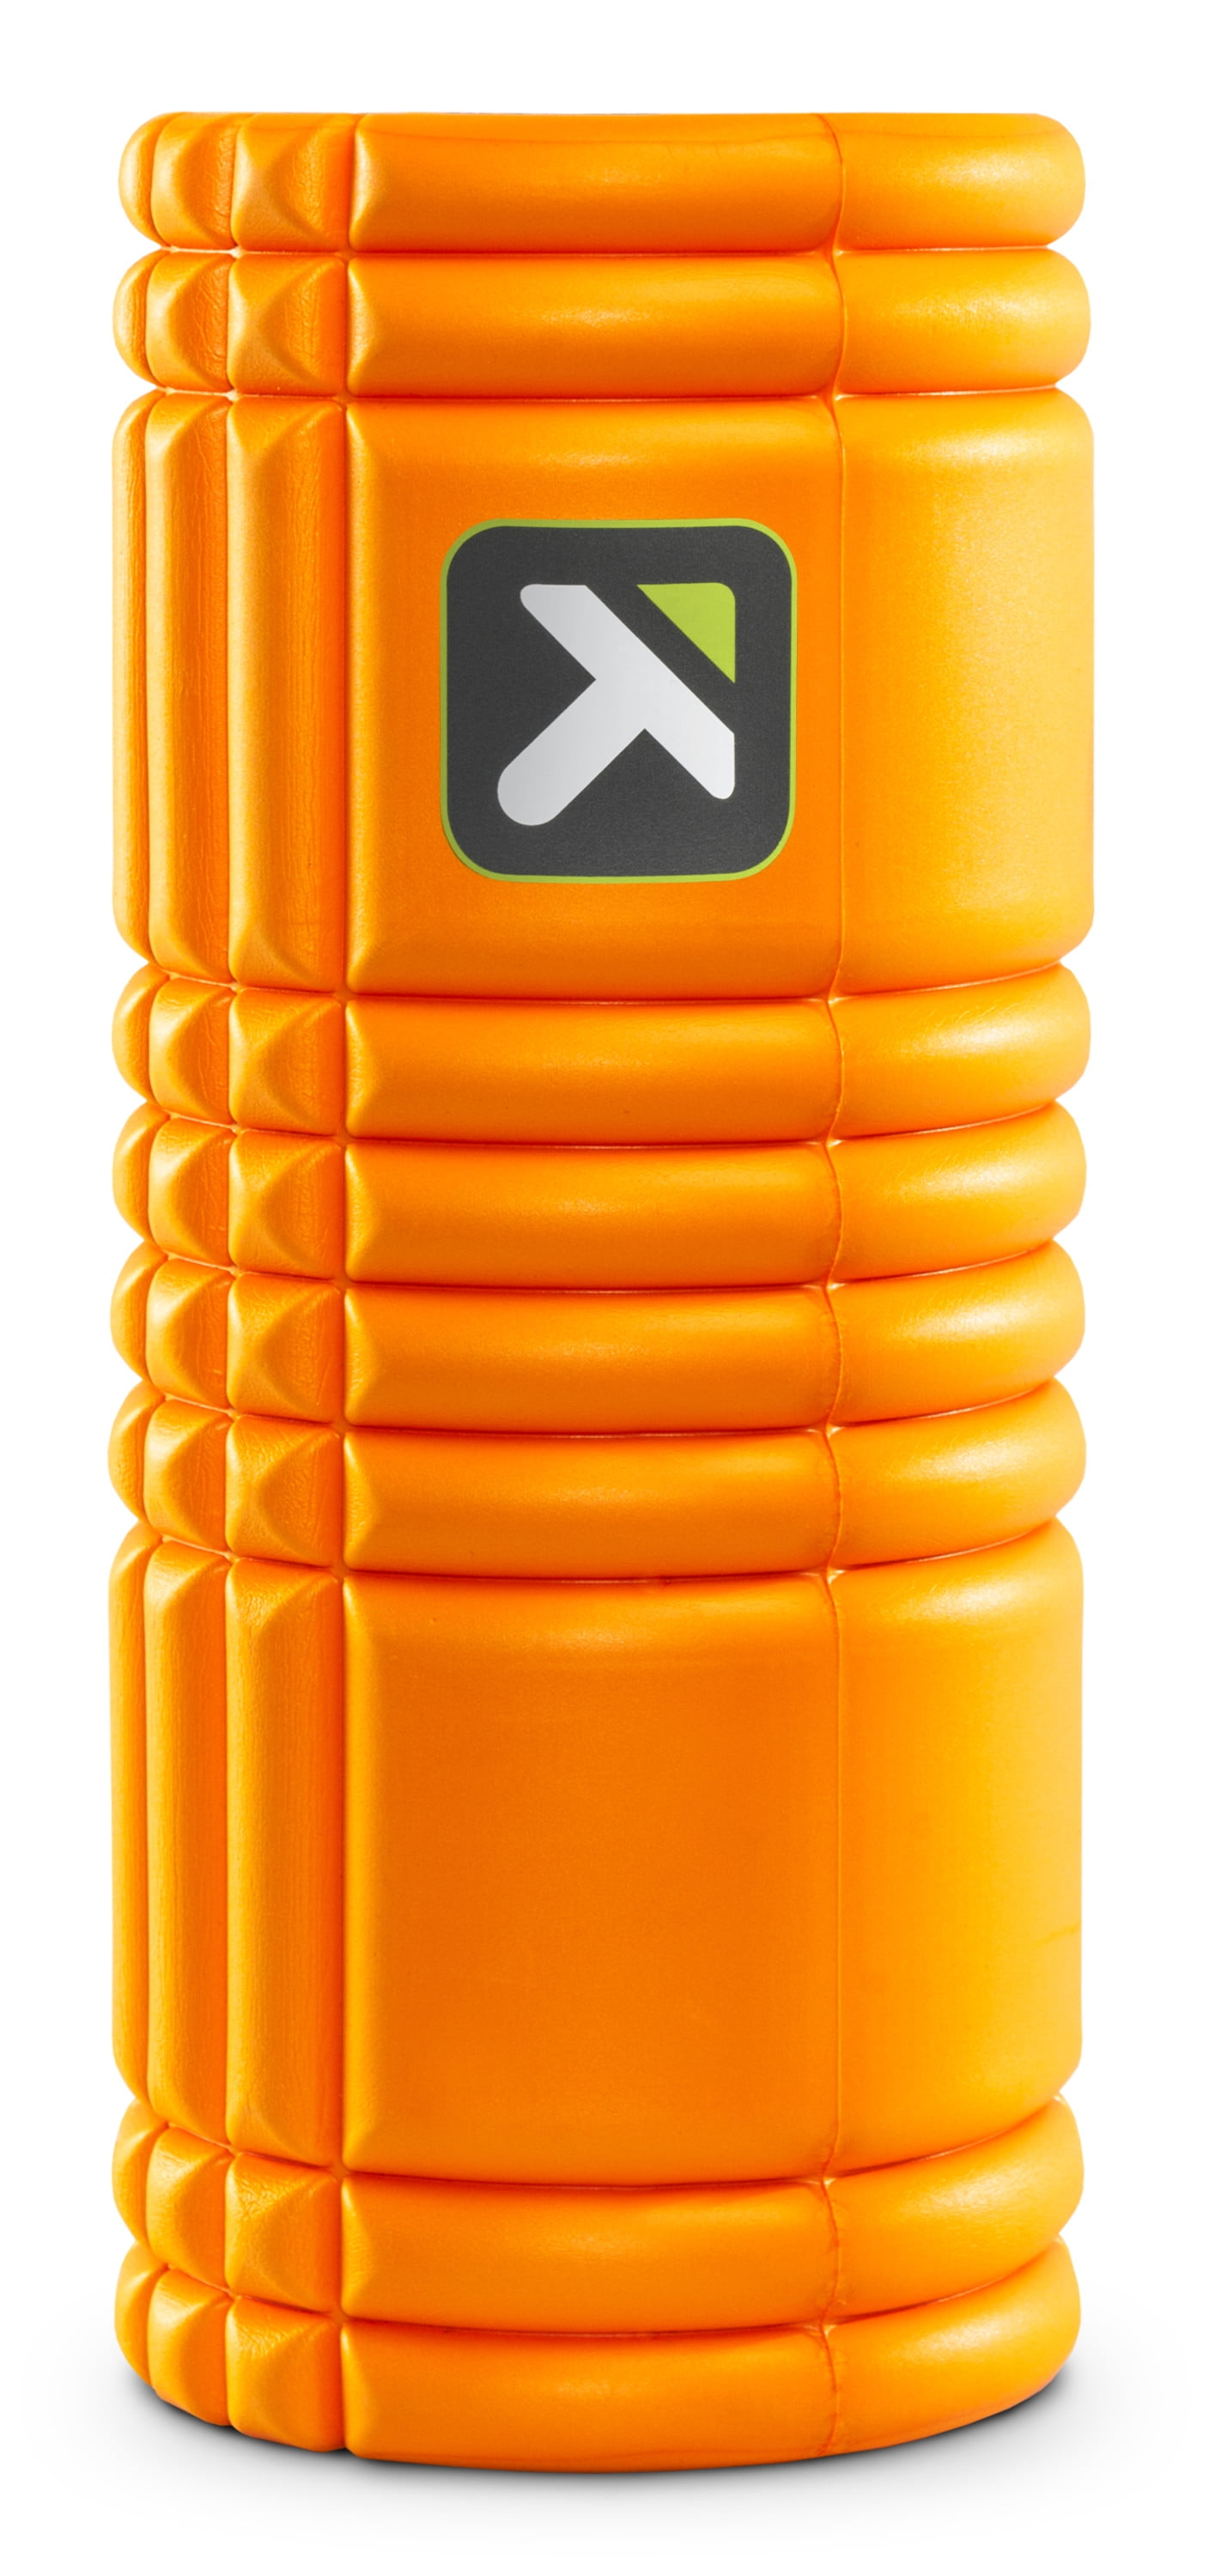 TriggerPoint GRID 1.0 Foam Roller Orange 13"